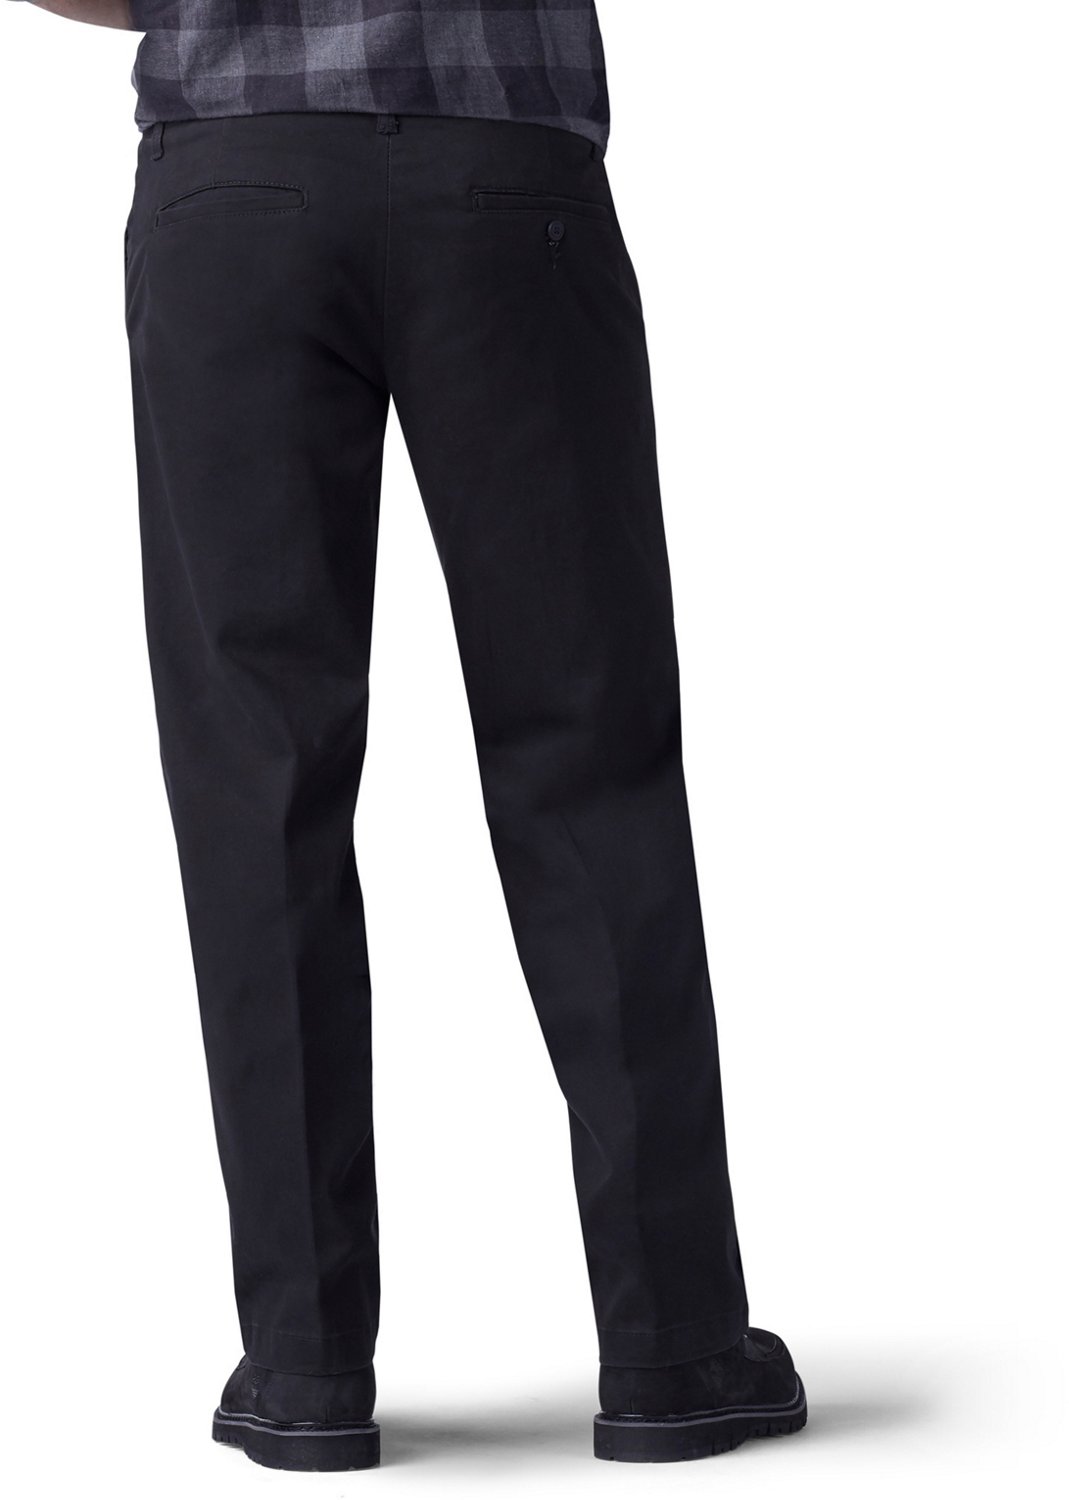 Lee Men's Extreme Comfort Khaki Pants | Free Shipping at Academy